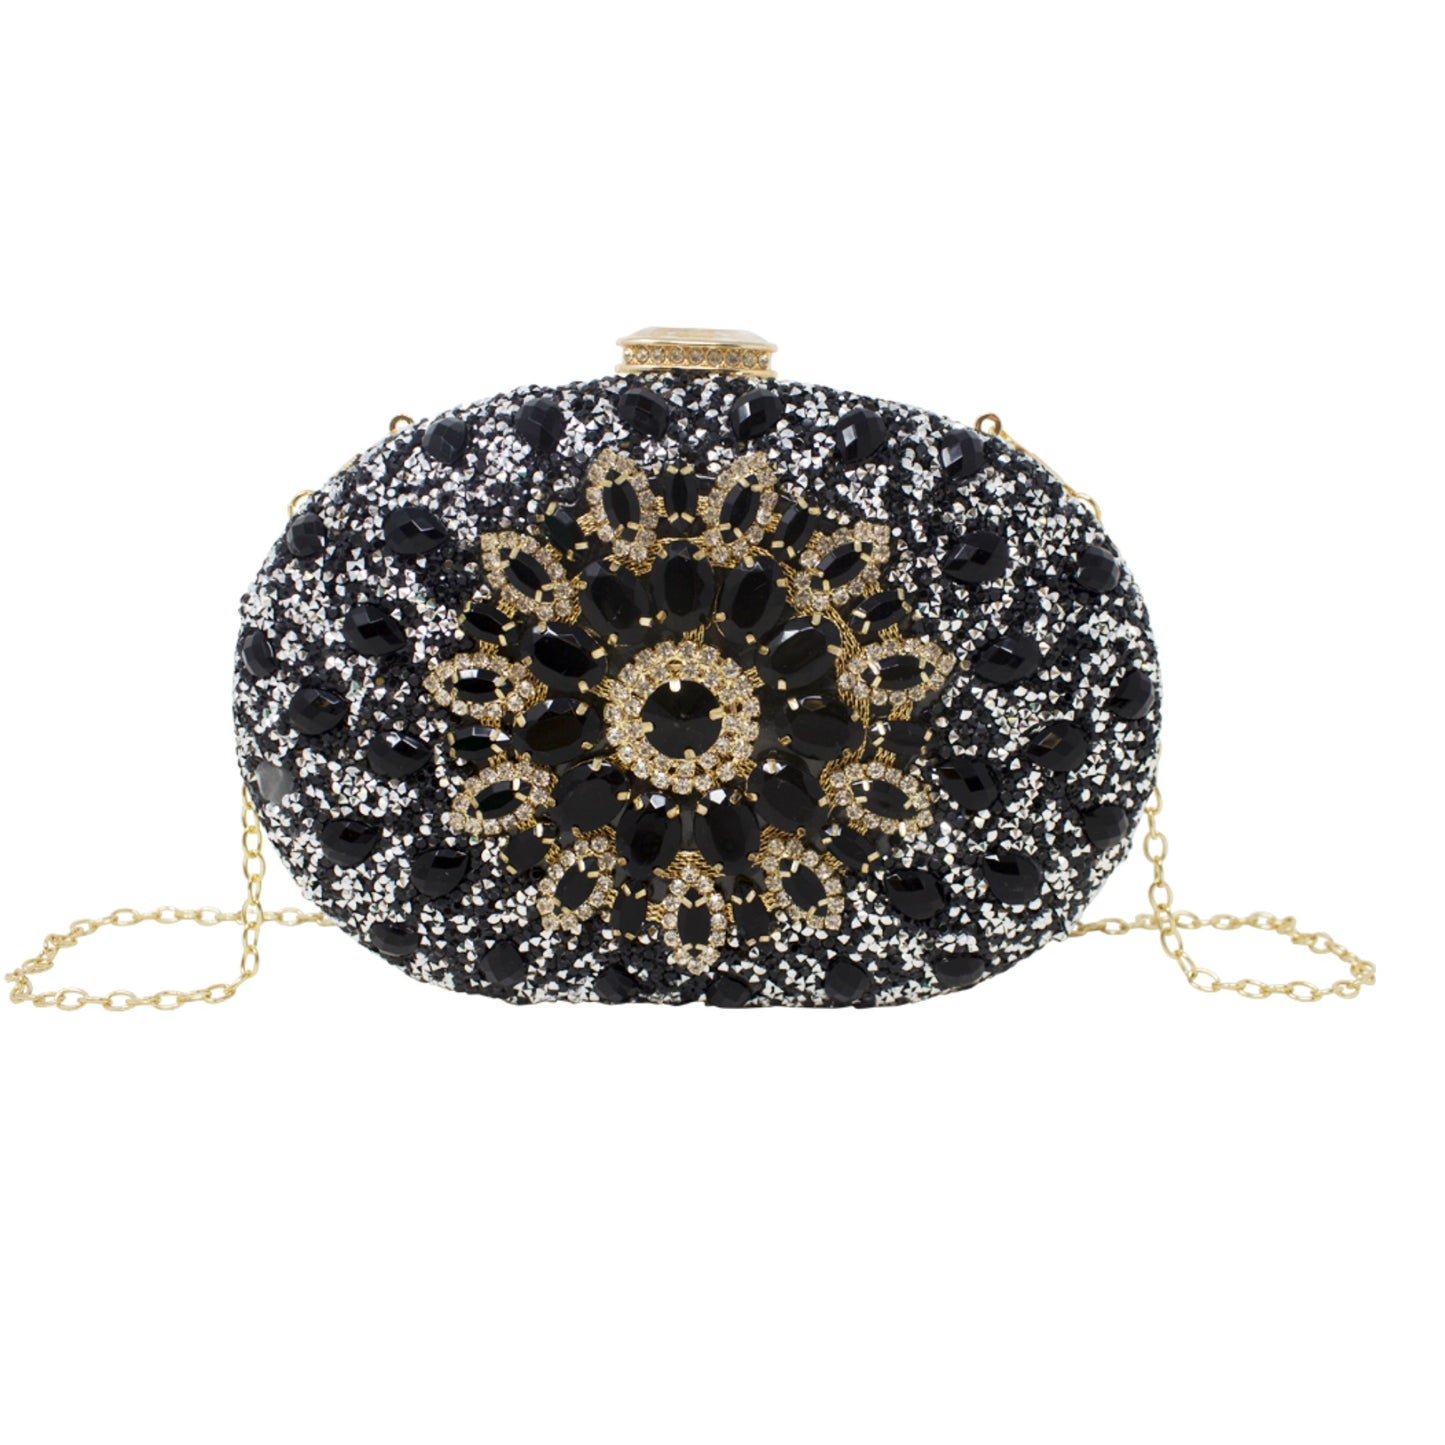 Sparkly Black Gold Diamante Encrusted Clutch Bag